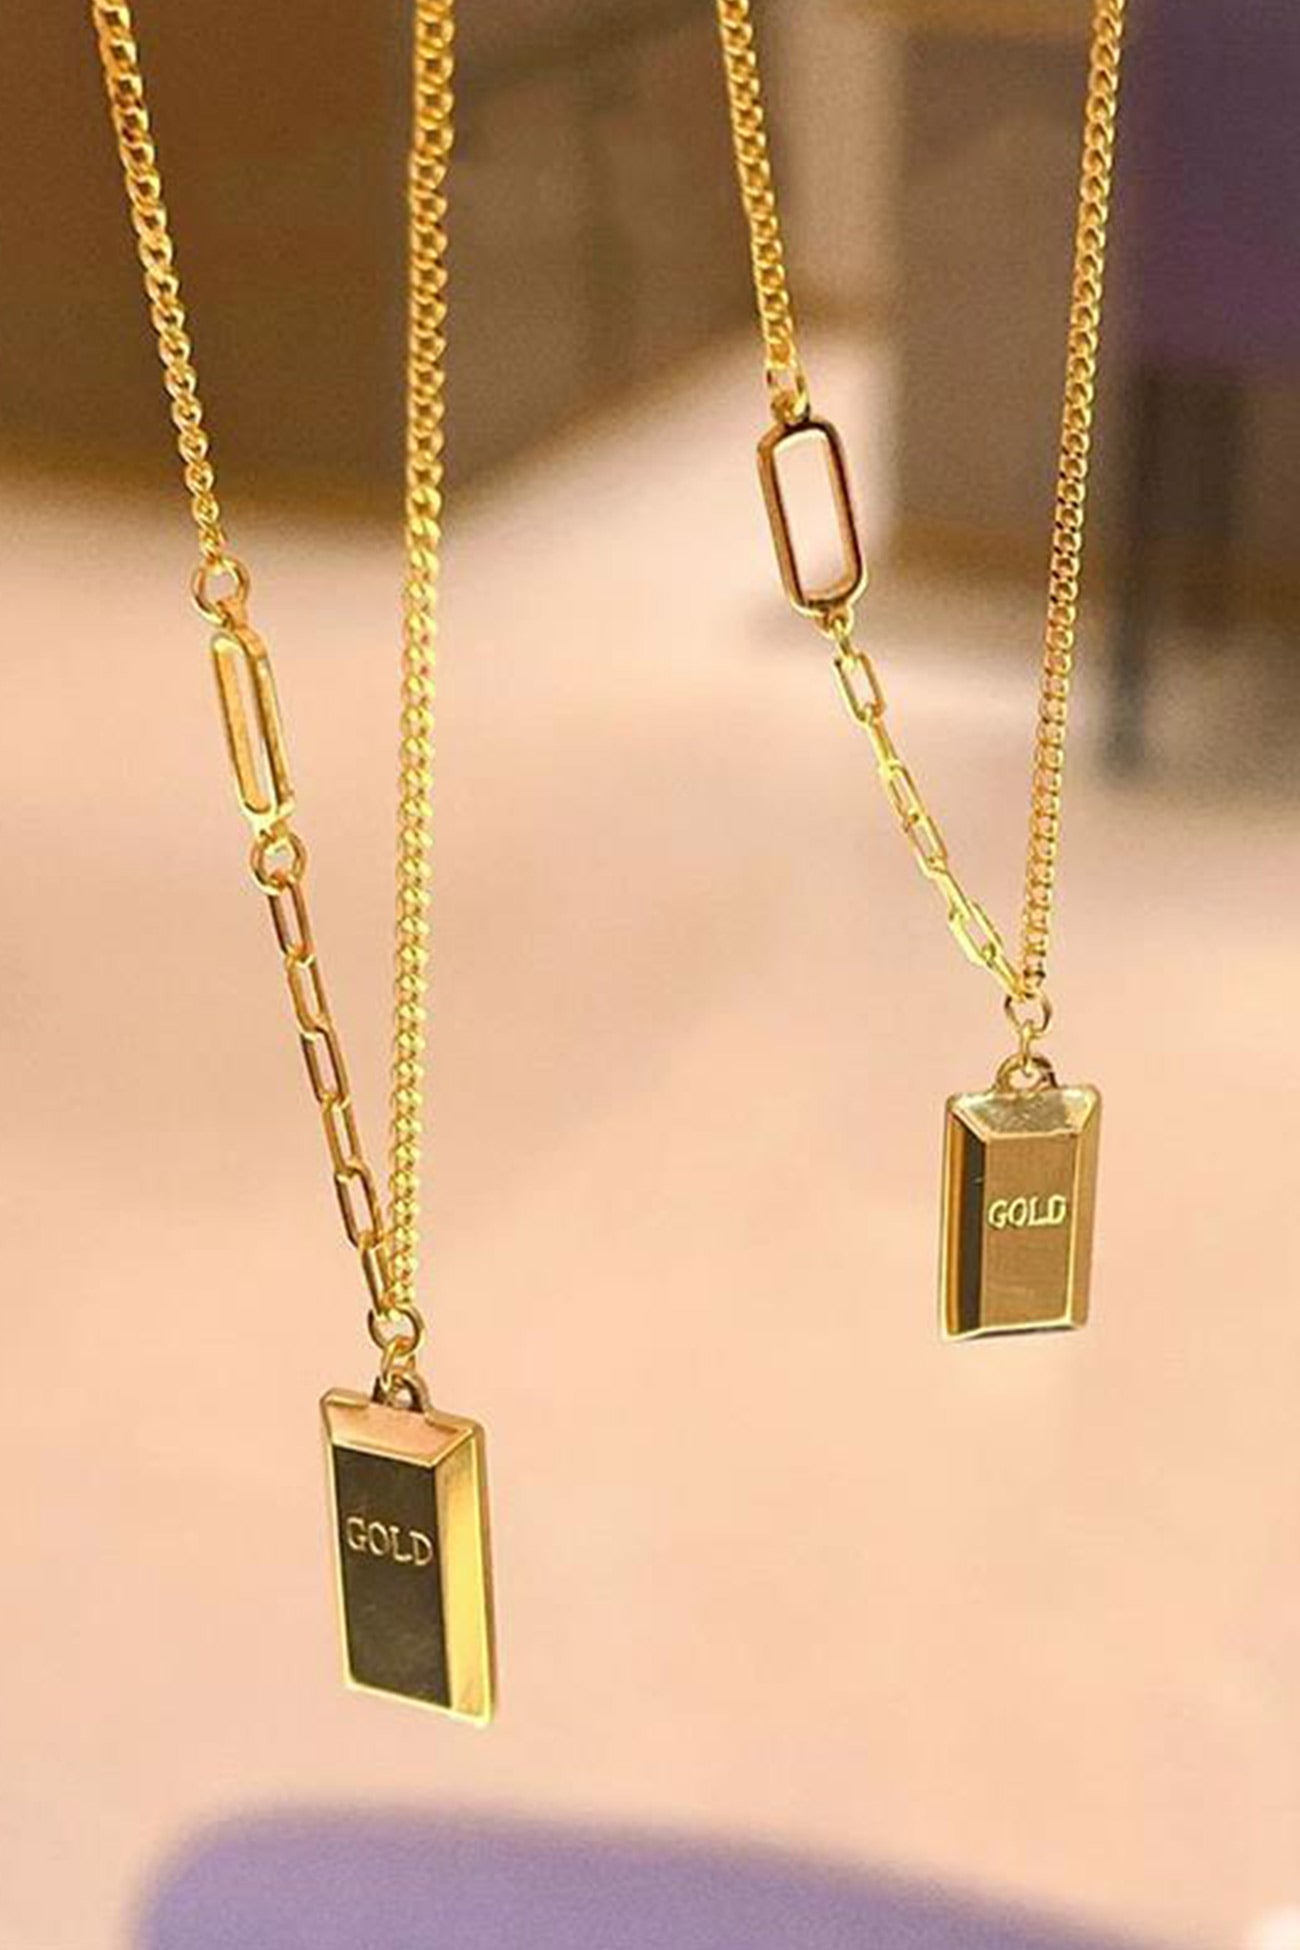 Flytonn-Valentine's Day gift Small Gold Brick Pendant Necklace